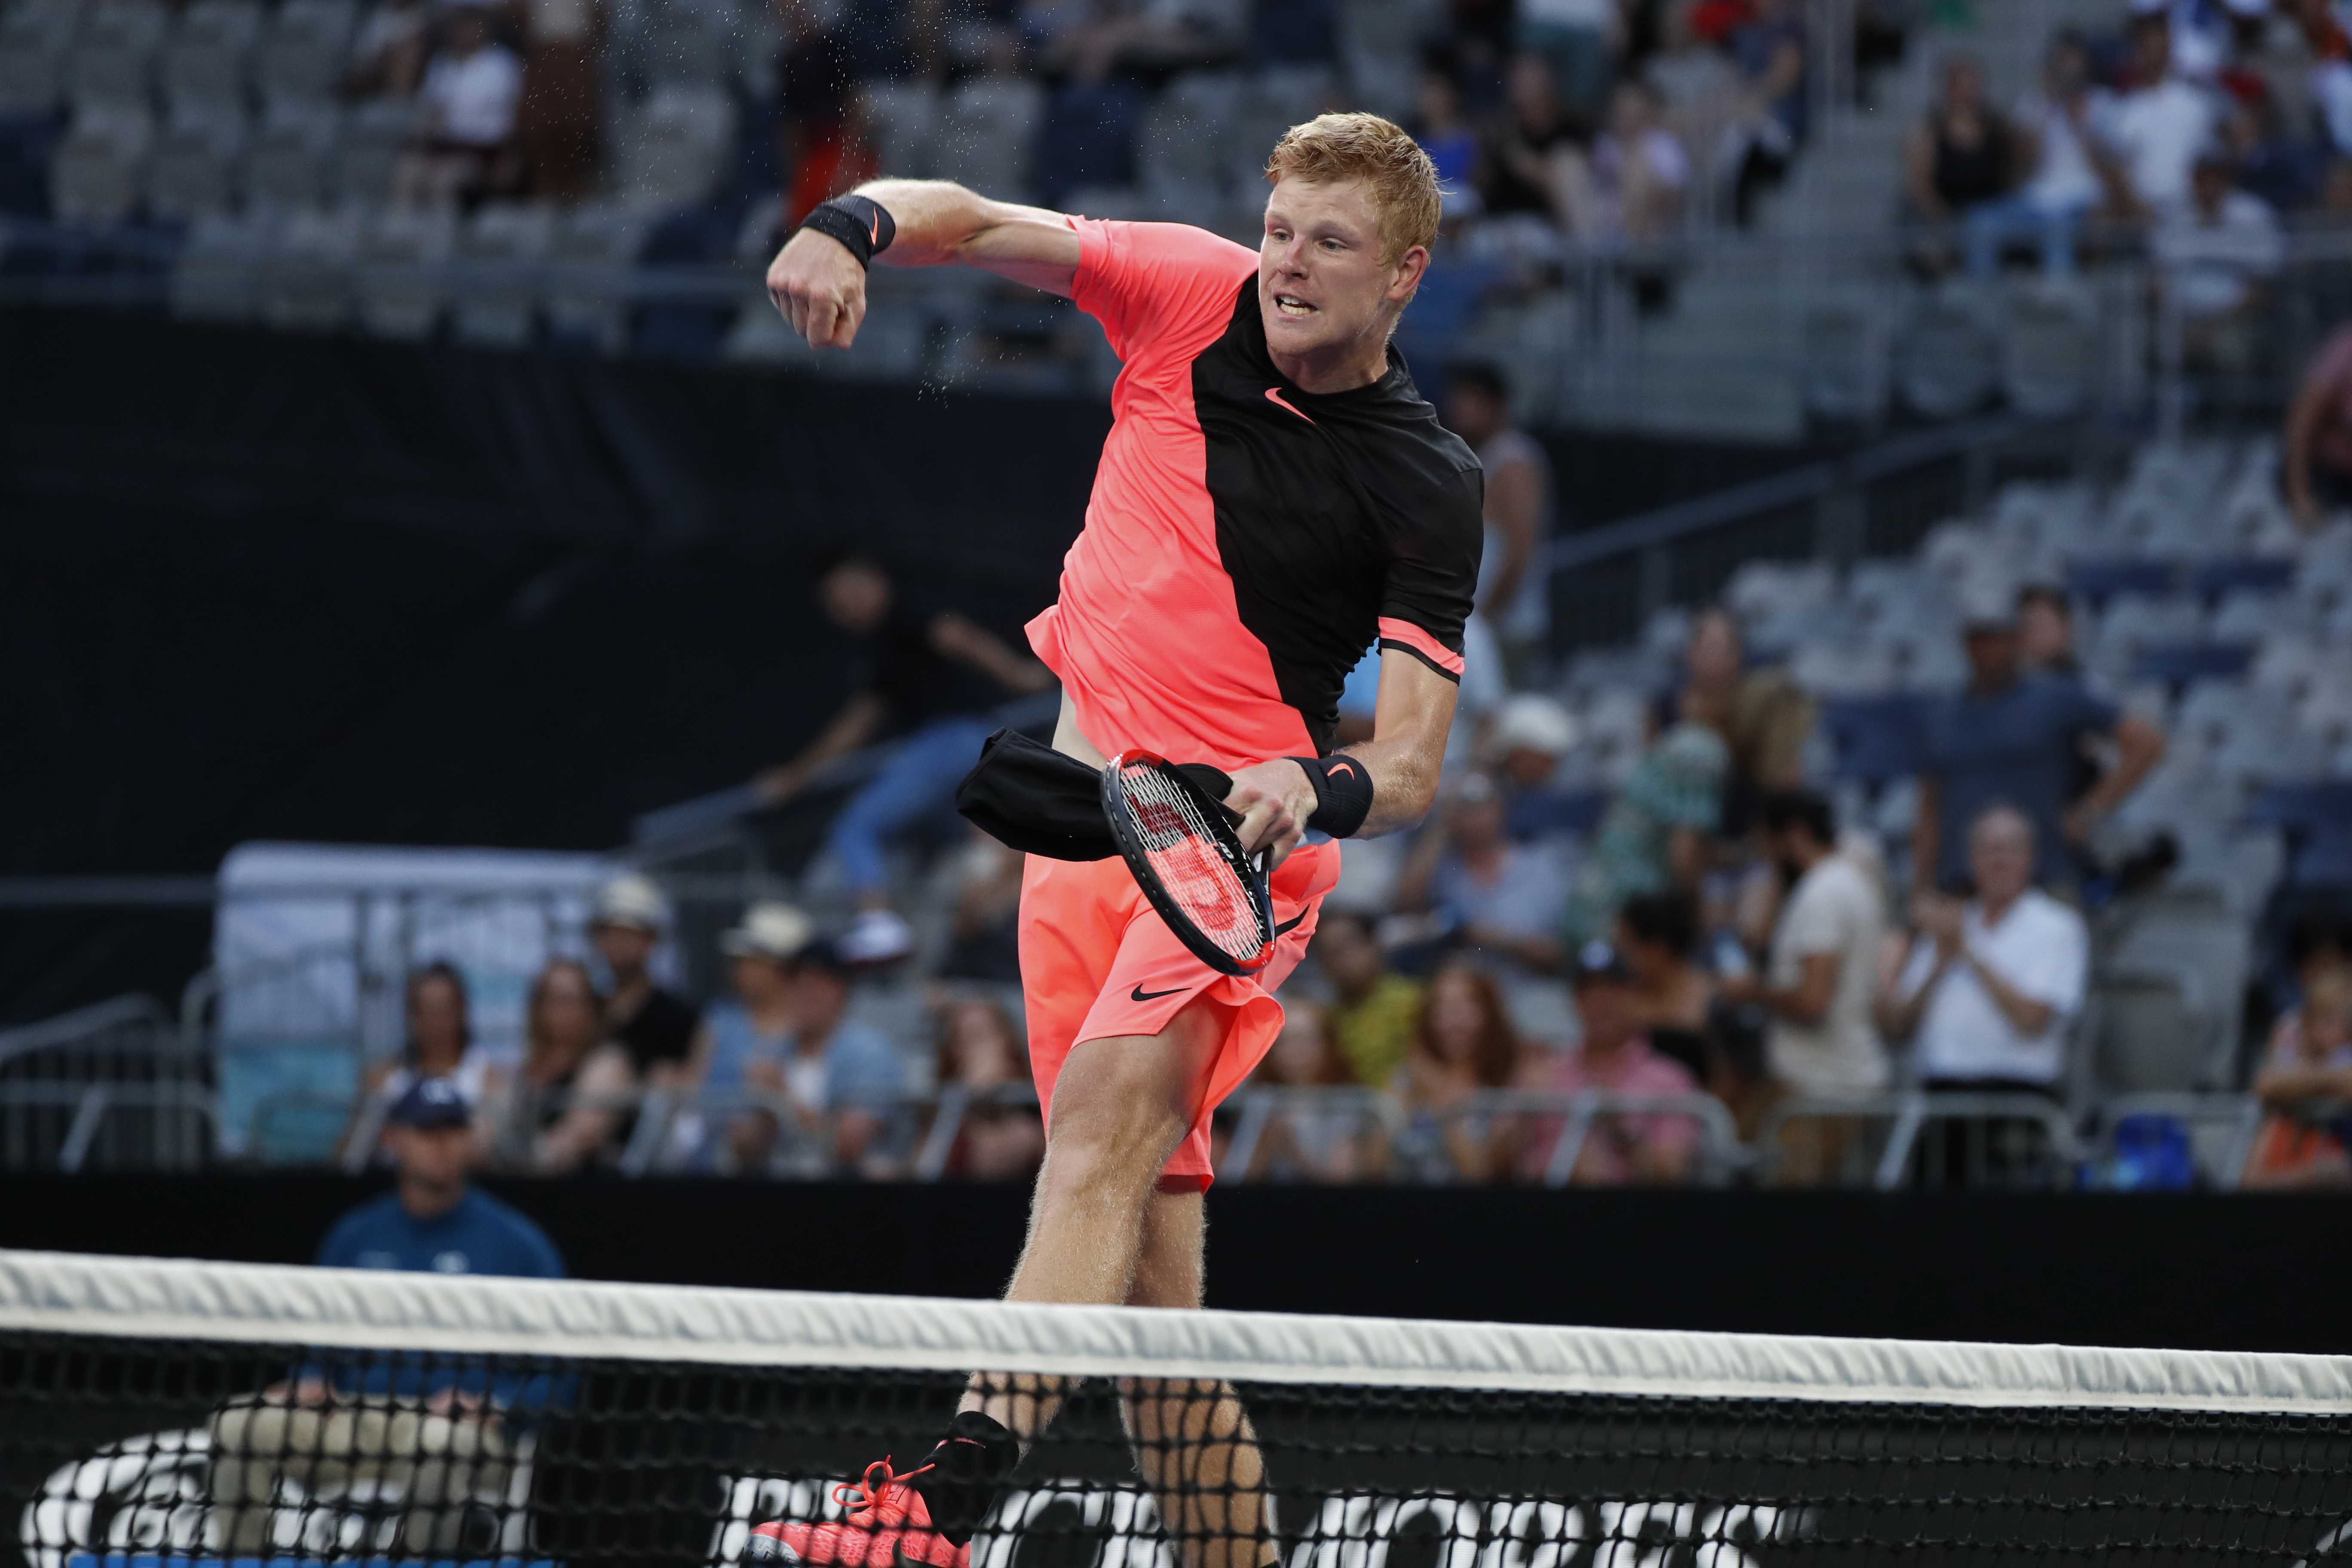 Tennis: Edmund ousts Seppi to enters quarterfinals